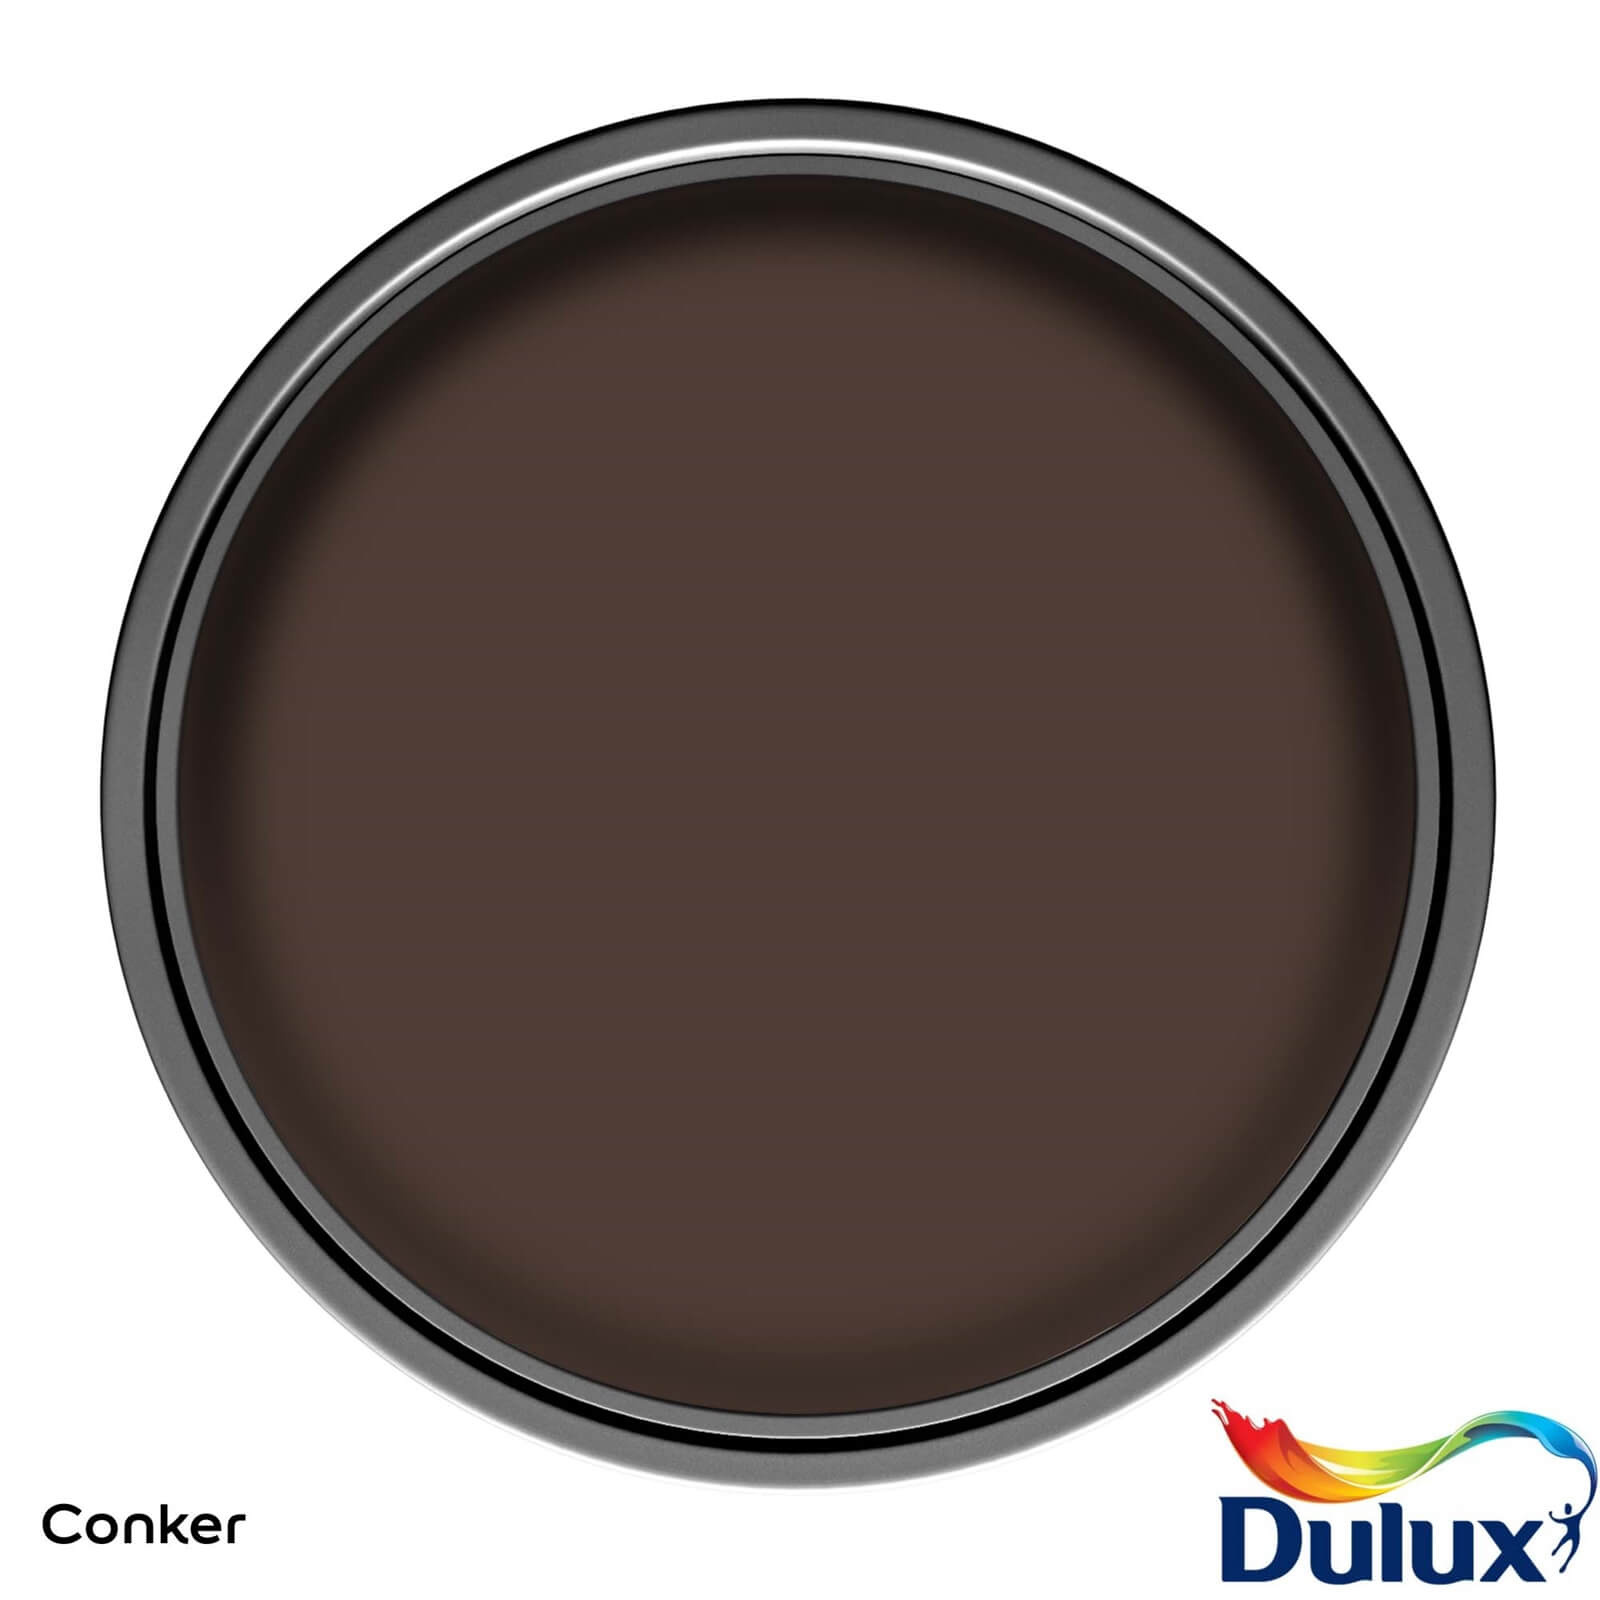 Dulux Weathershield Exterior Gloss Paint Conker - 750ml